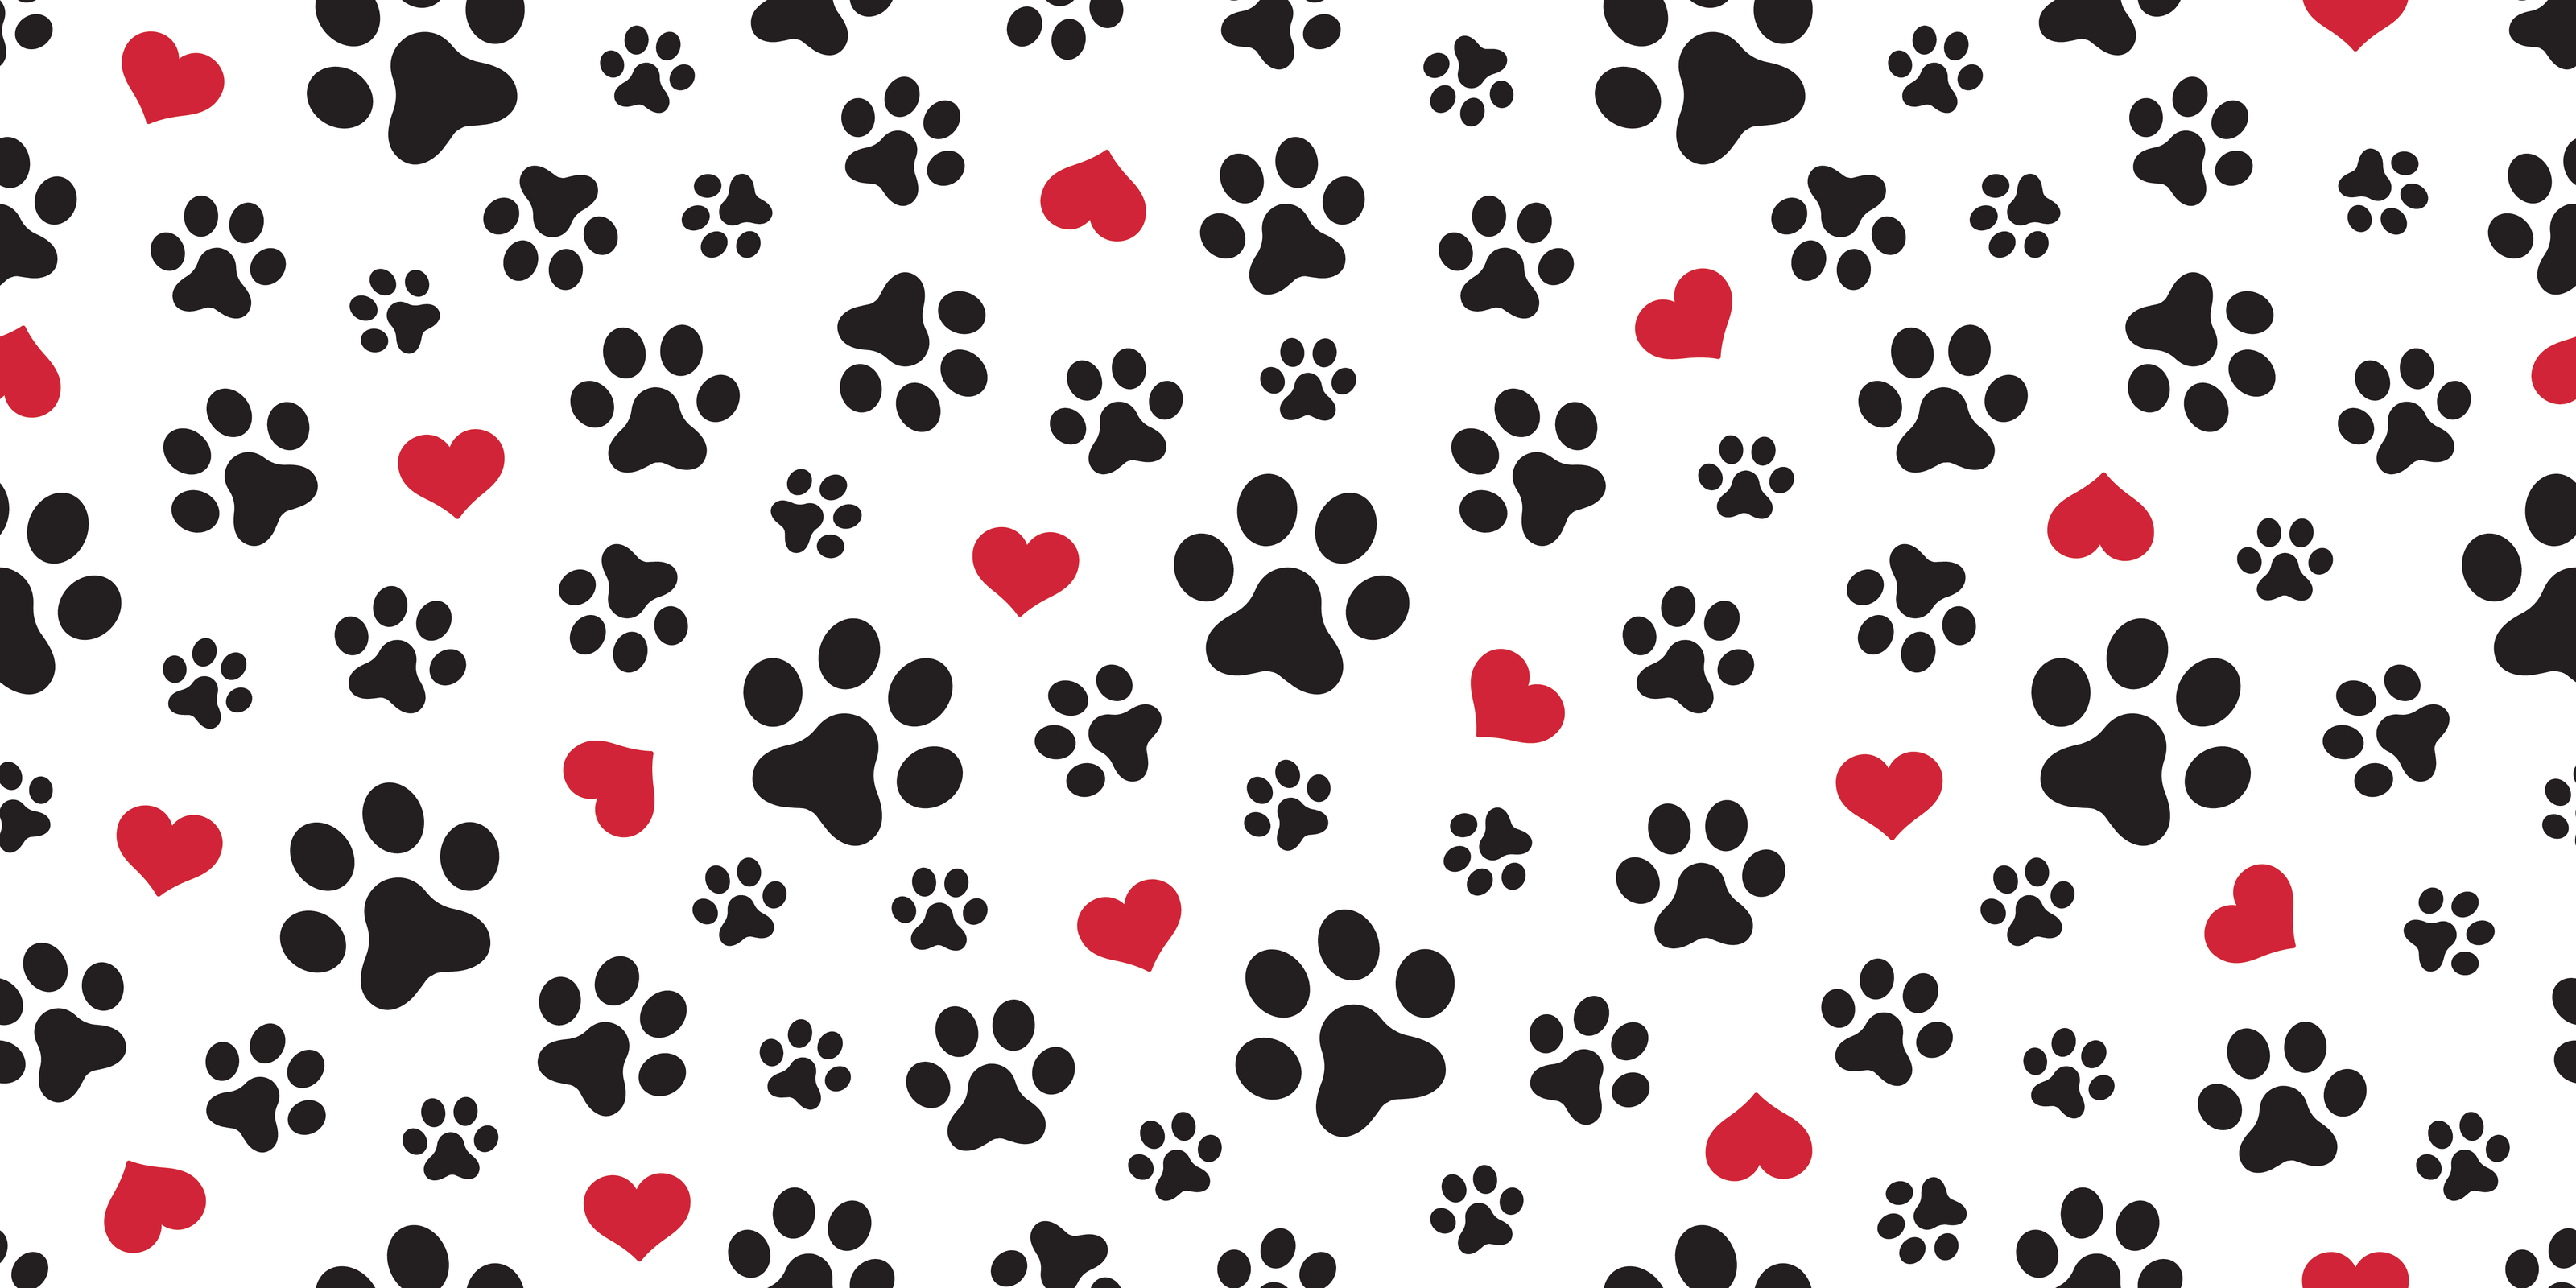 Dog Paw Print Love Wallpaper Mural - Murals Your Way